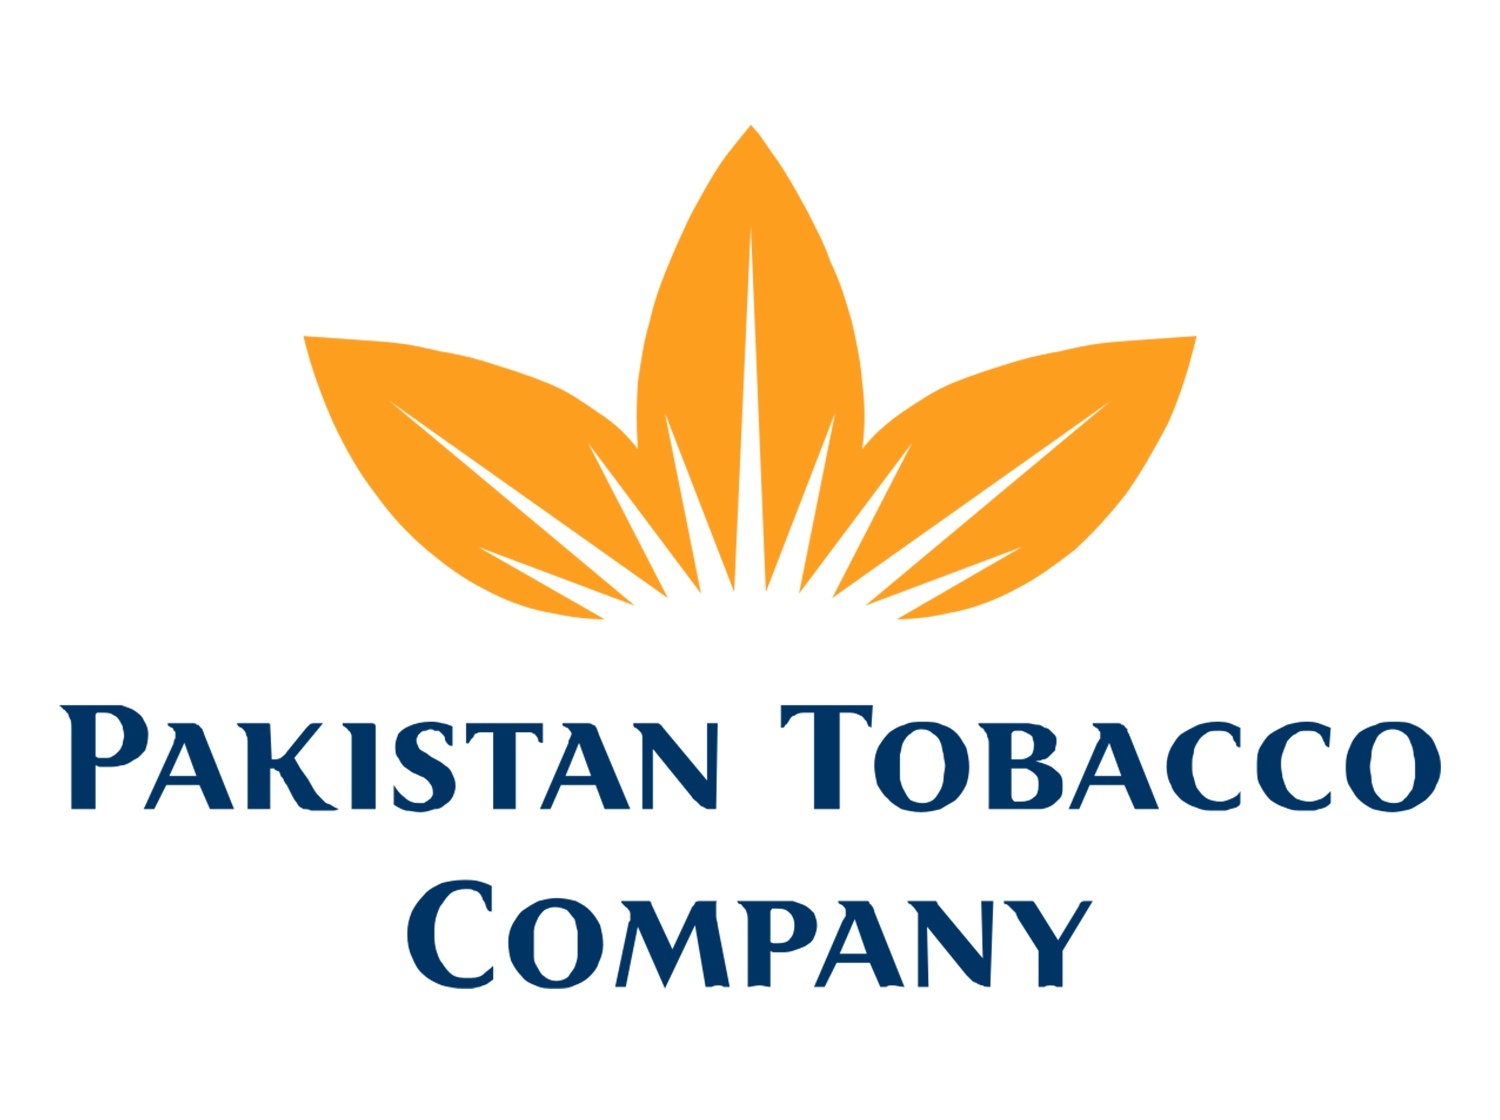 Pakistan tobacco company pfm client